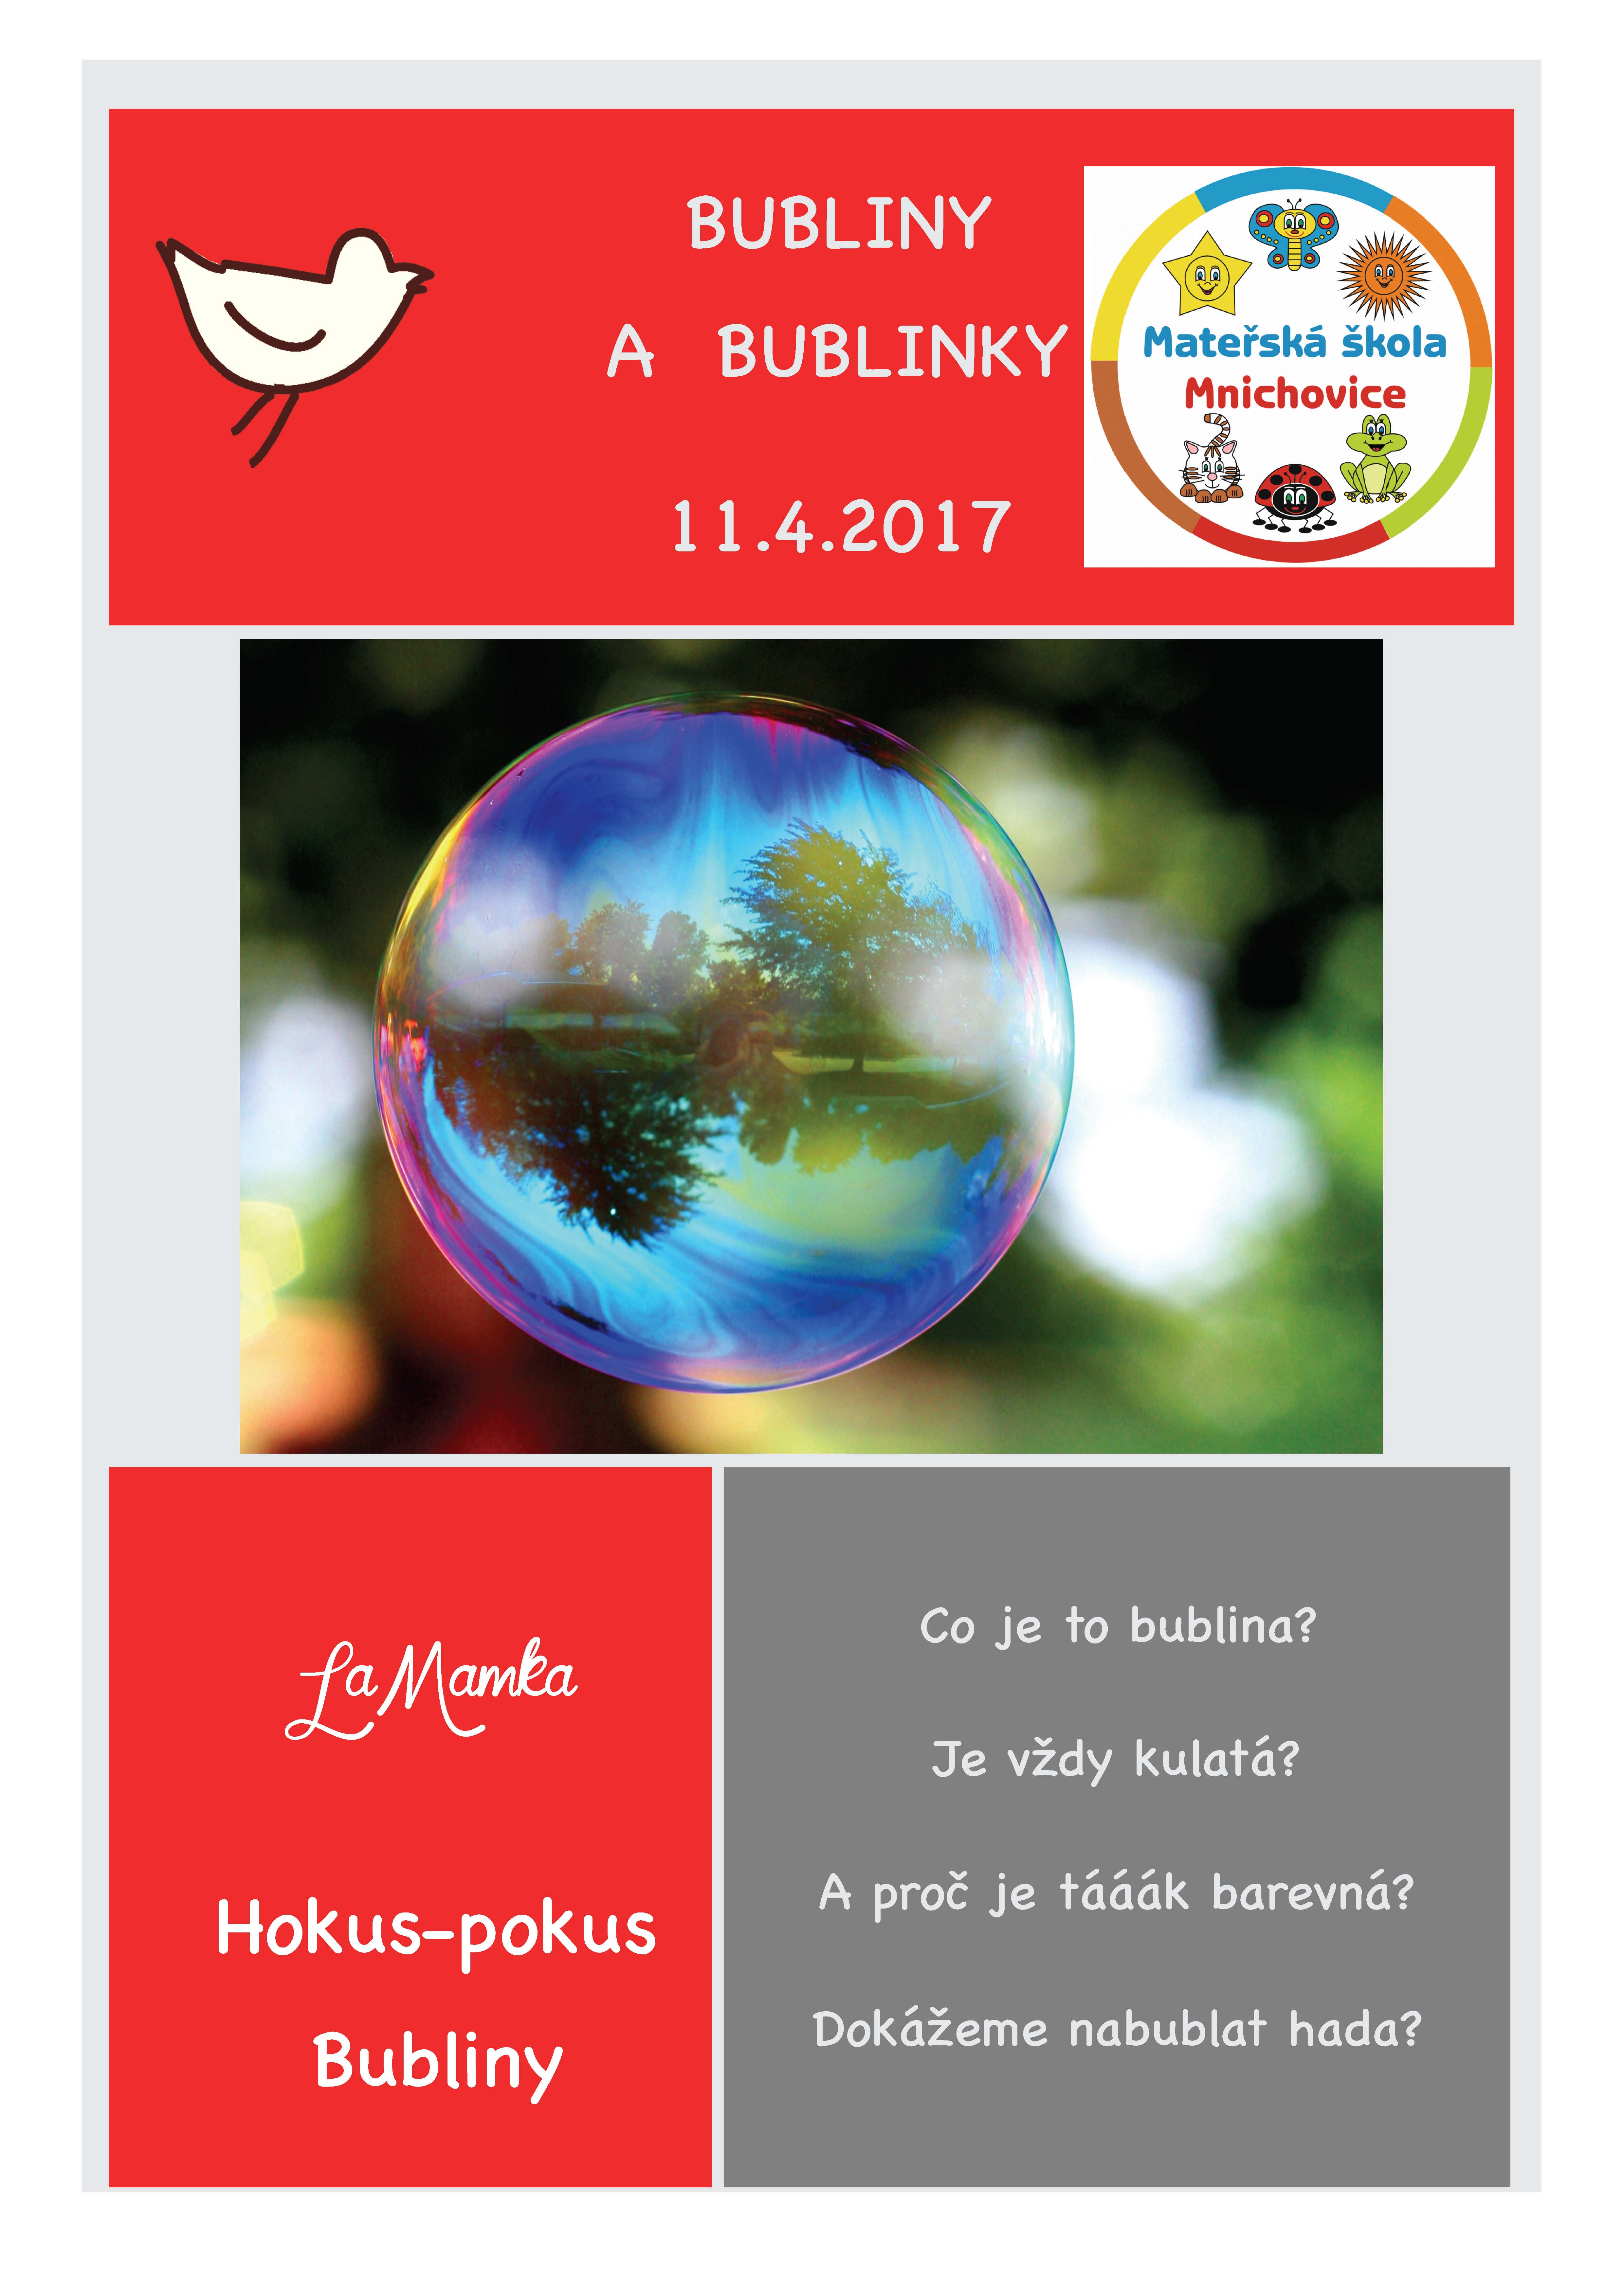 Bubliny info